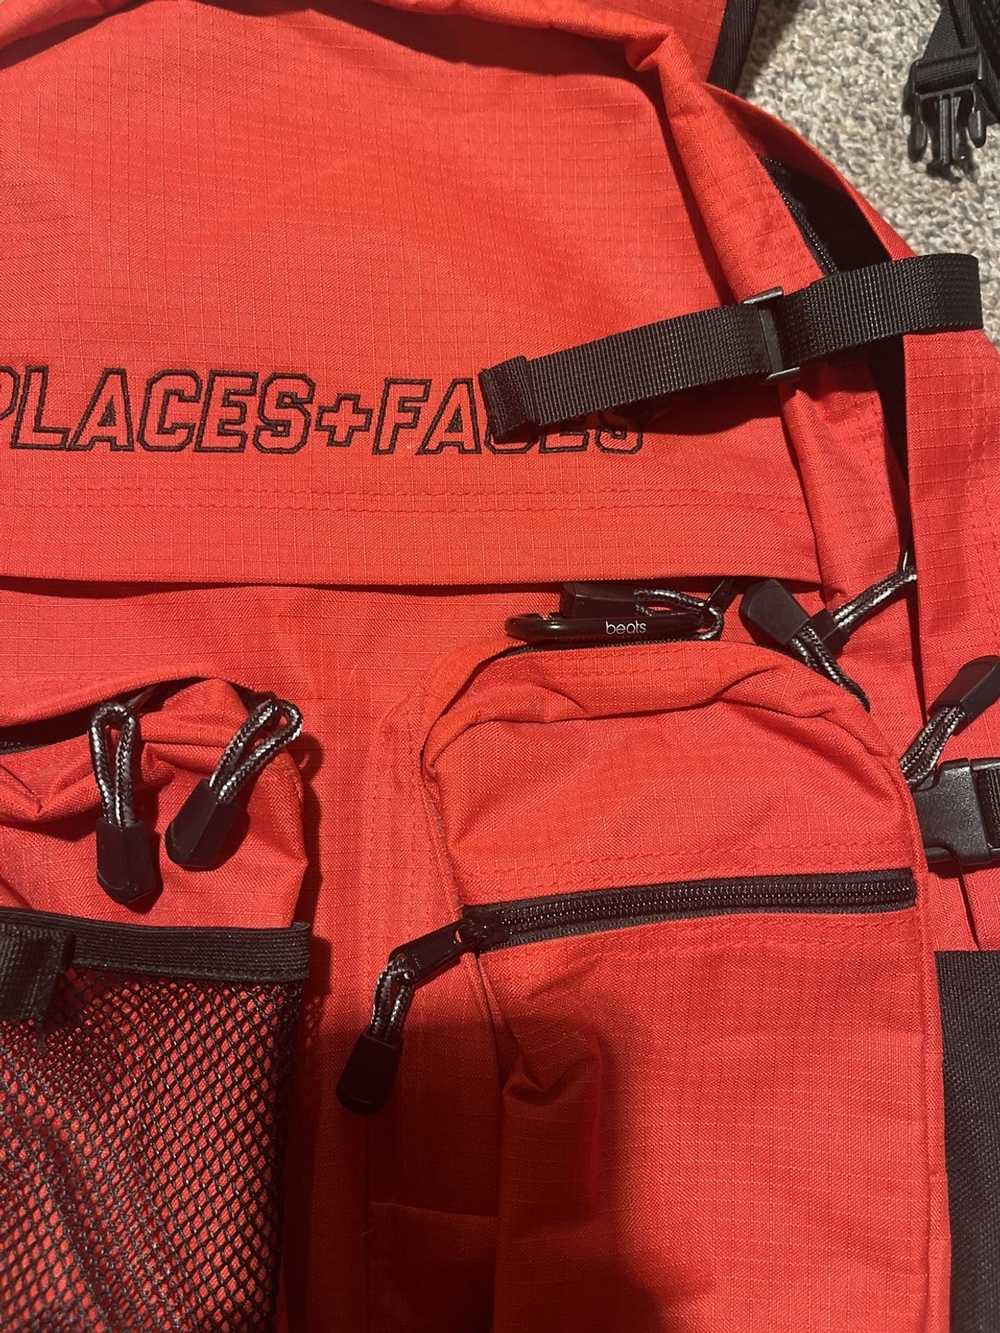 Places + Faces Places faces backpack - image 3